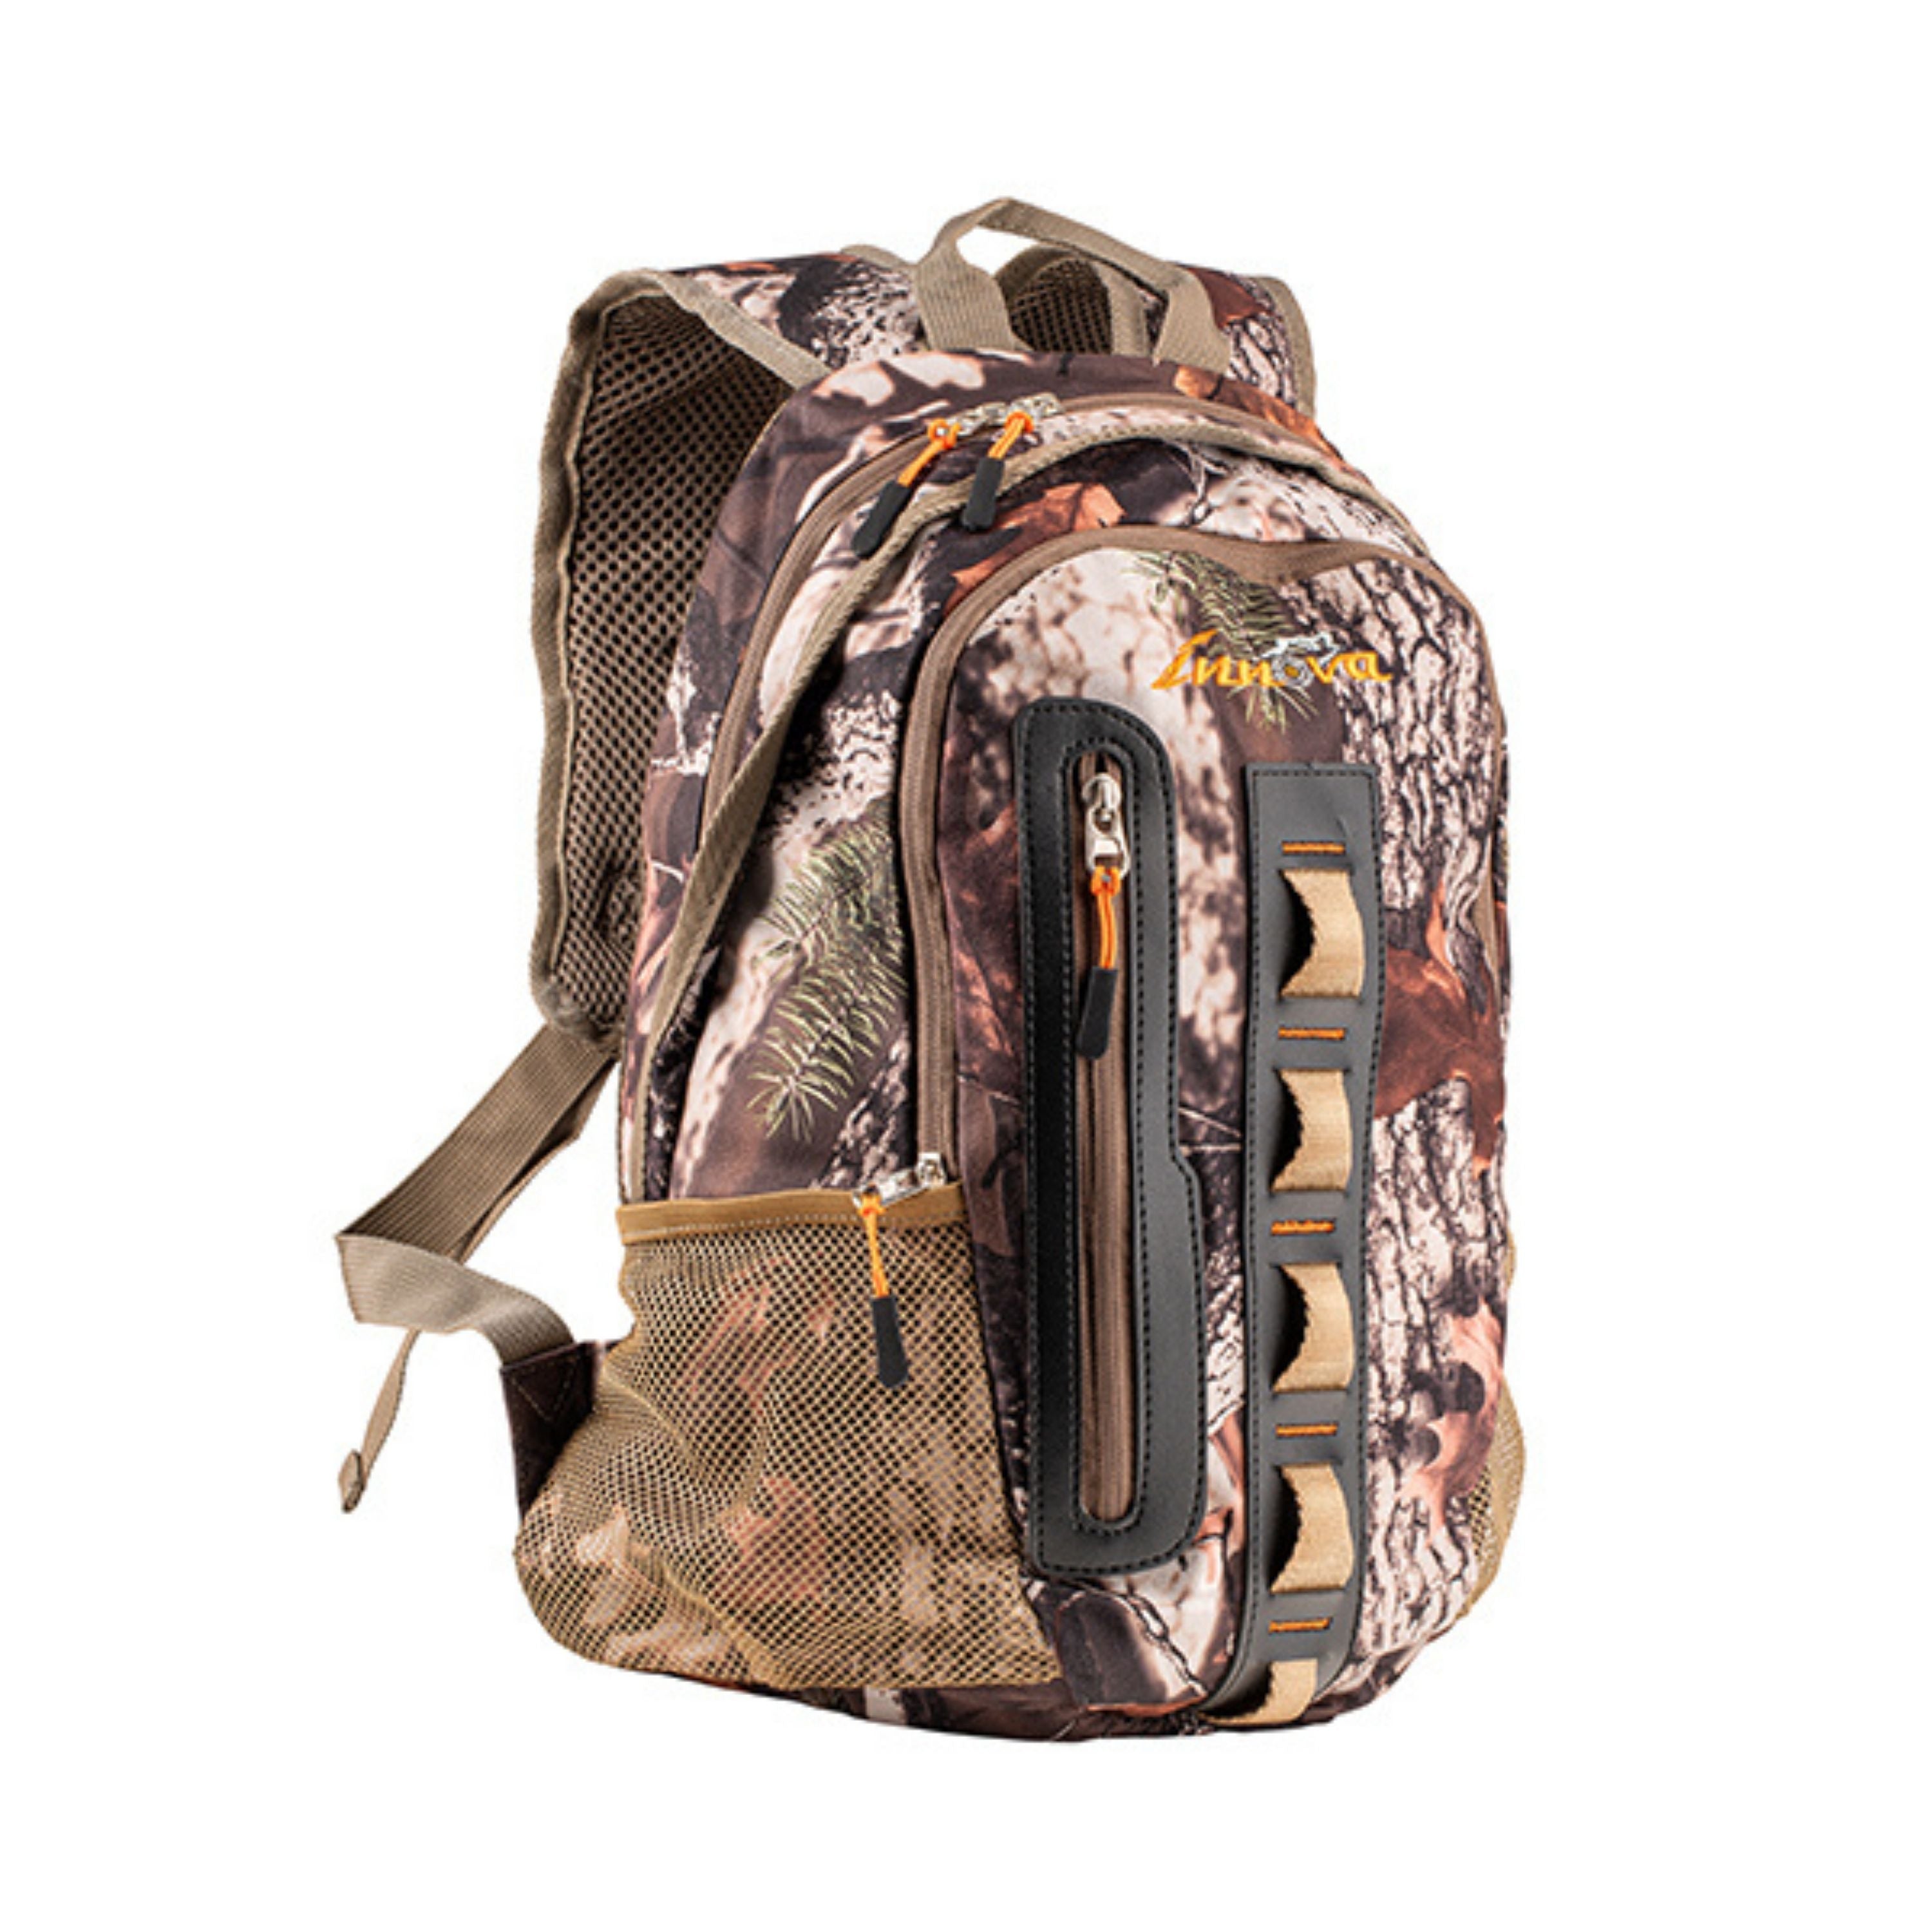 "Wood river" backpack - 30 L